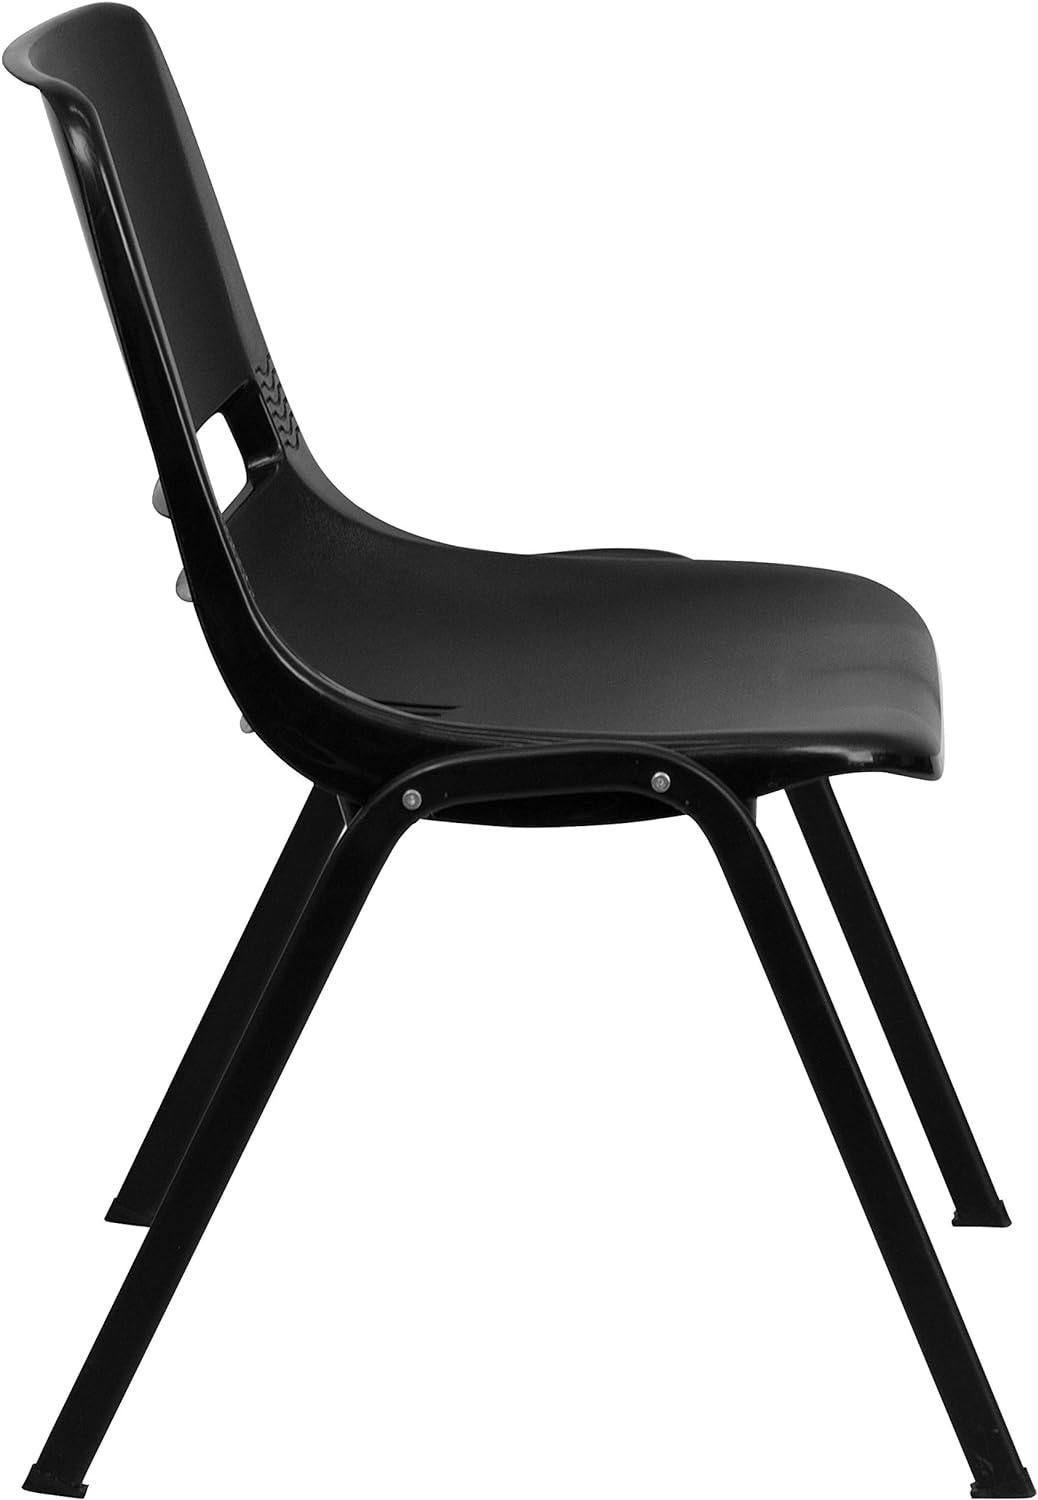 ErgoKids 440 lb Capacity Black Metal Stack Chair for Preschool